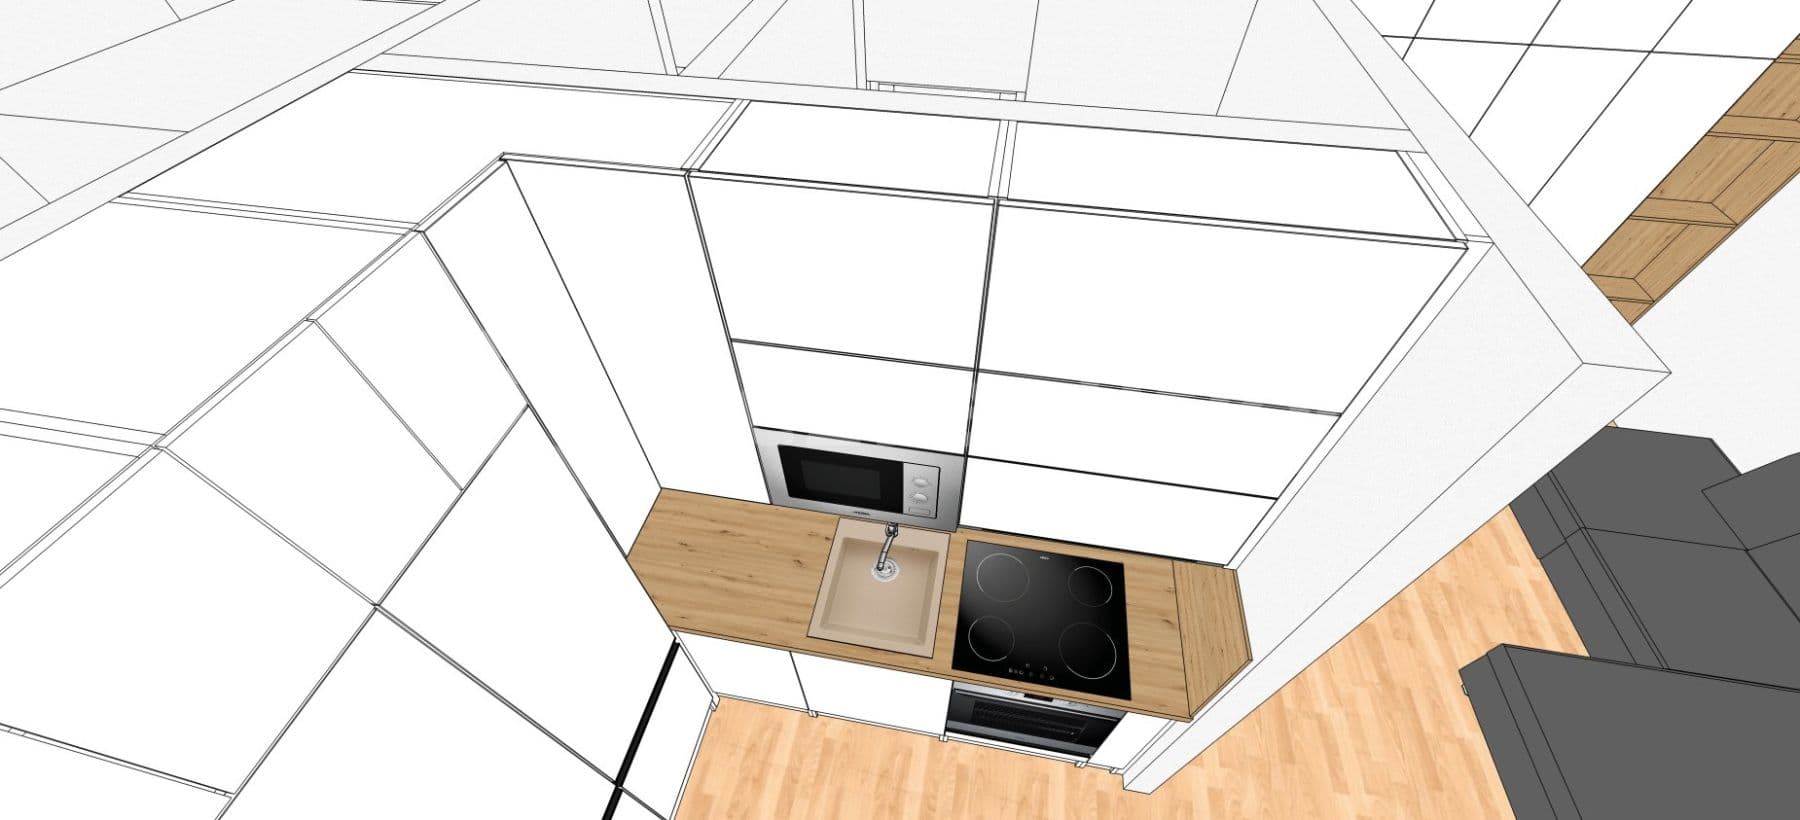 2 bedroom with open-plan kitchen flat for sale, 65 m², Ostrava, Moravskoslezský Region